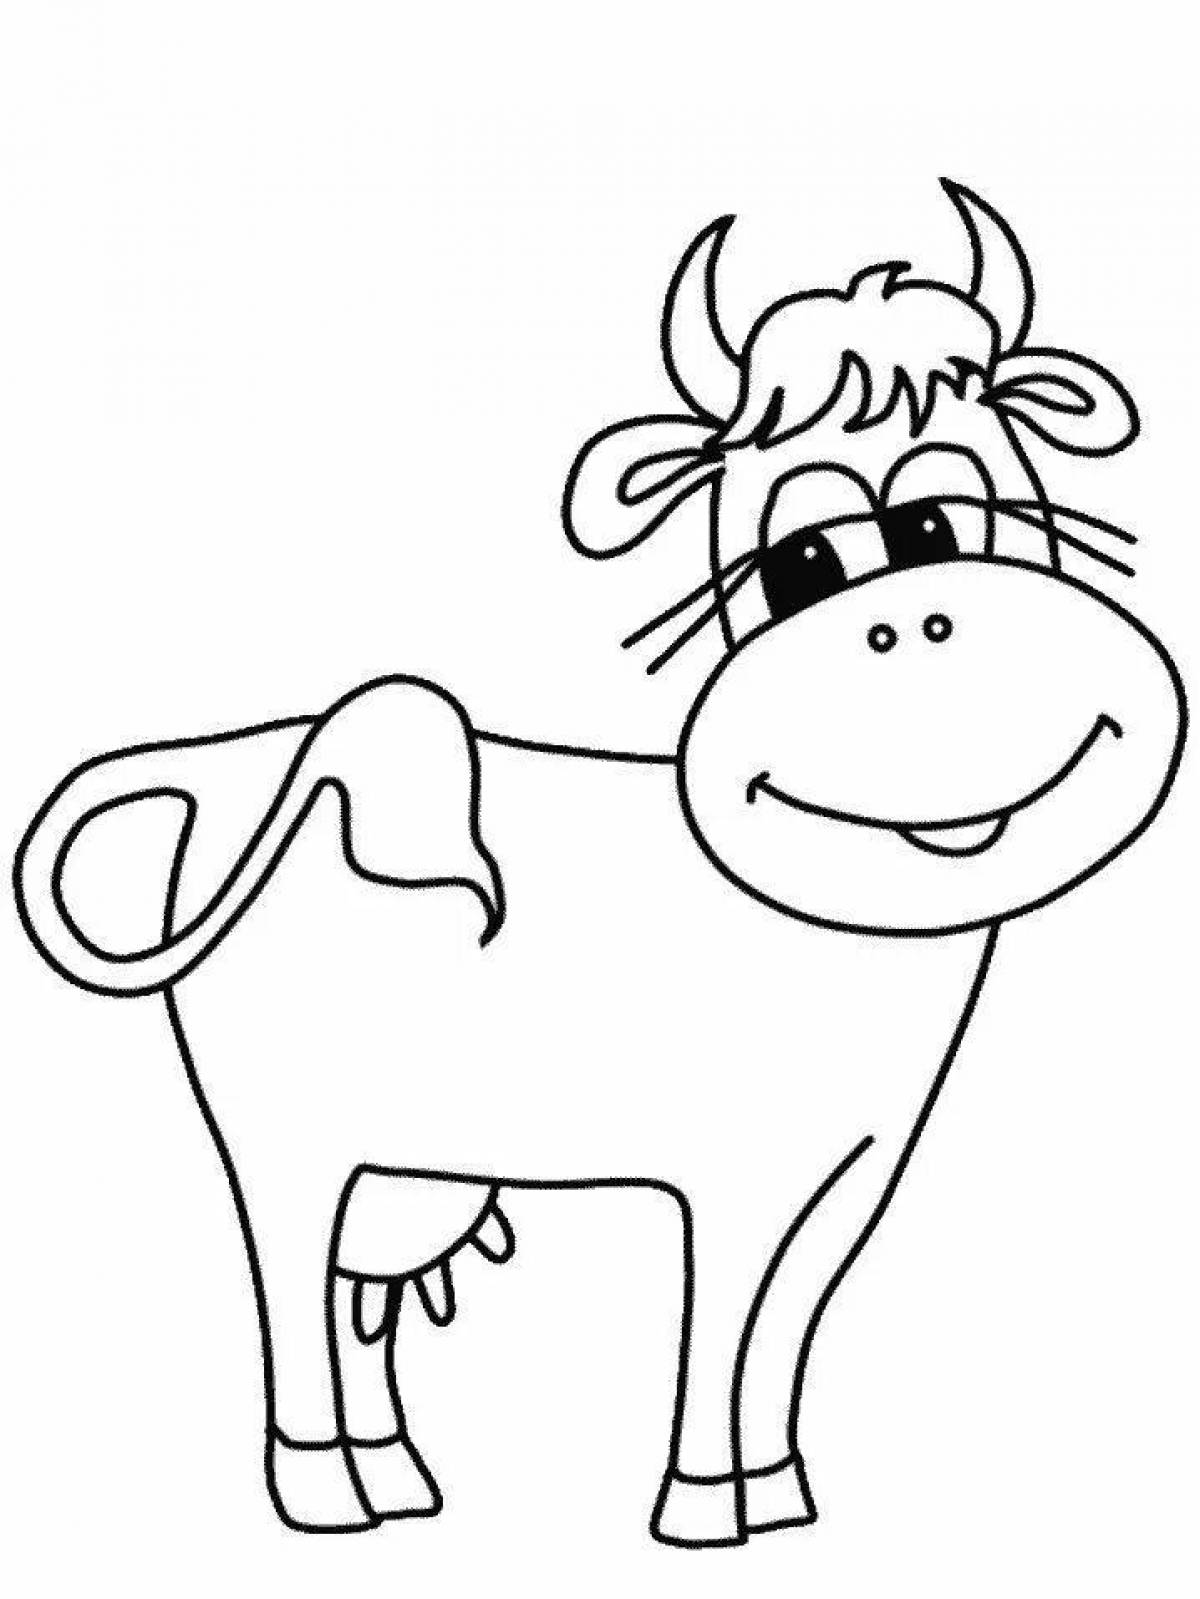 Cow#2